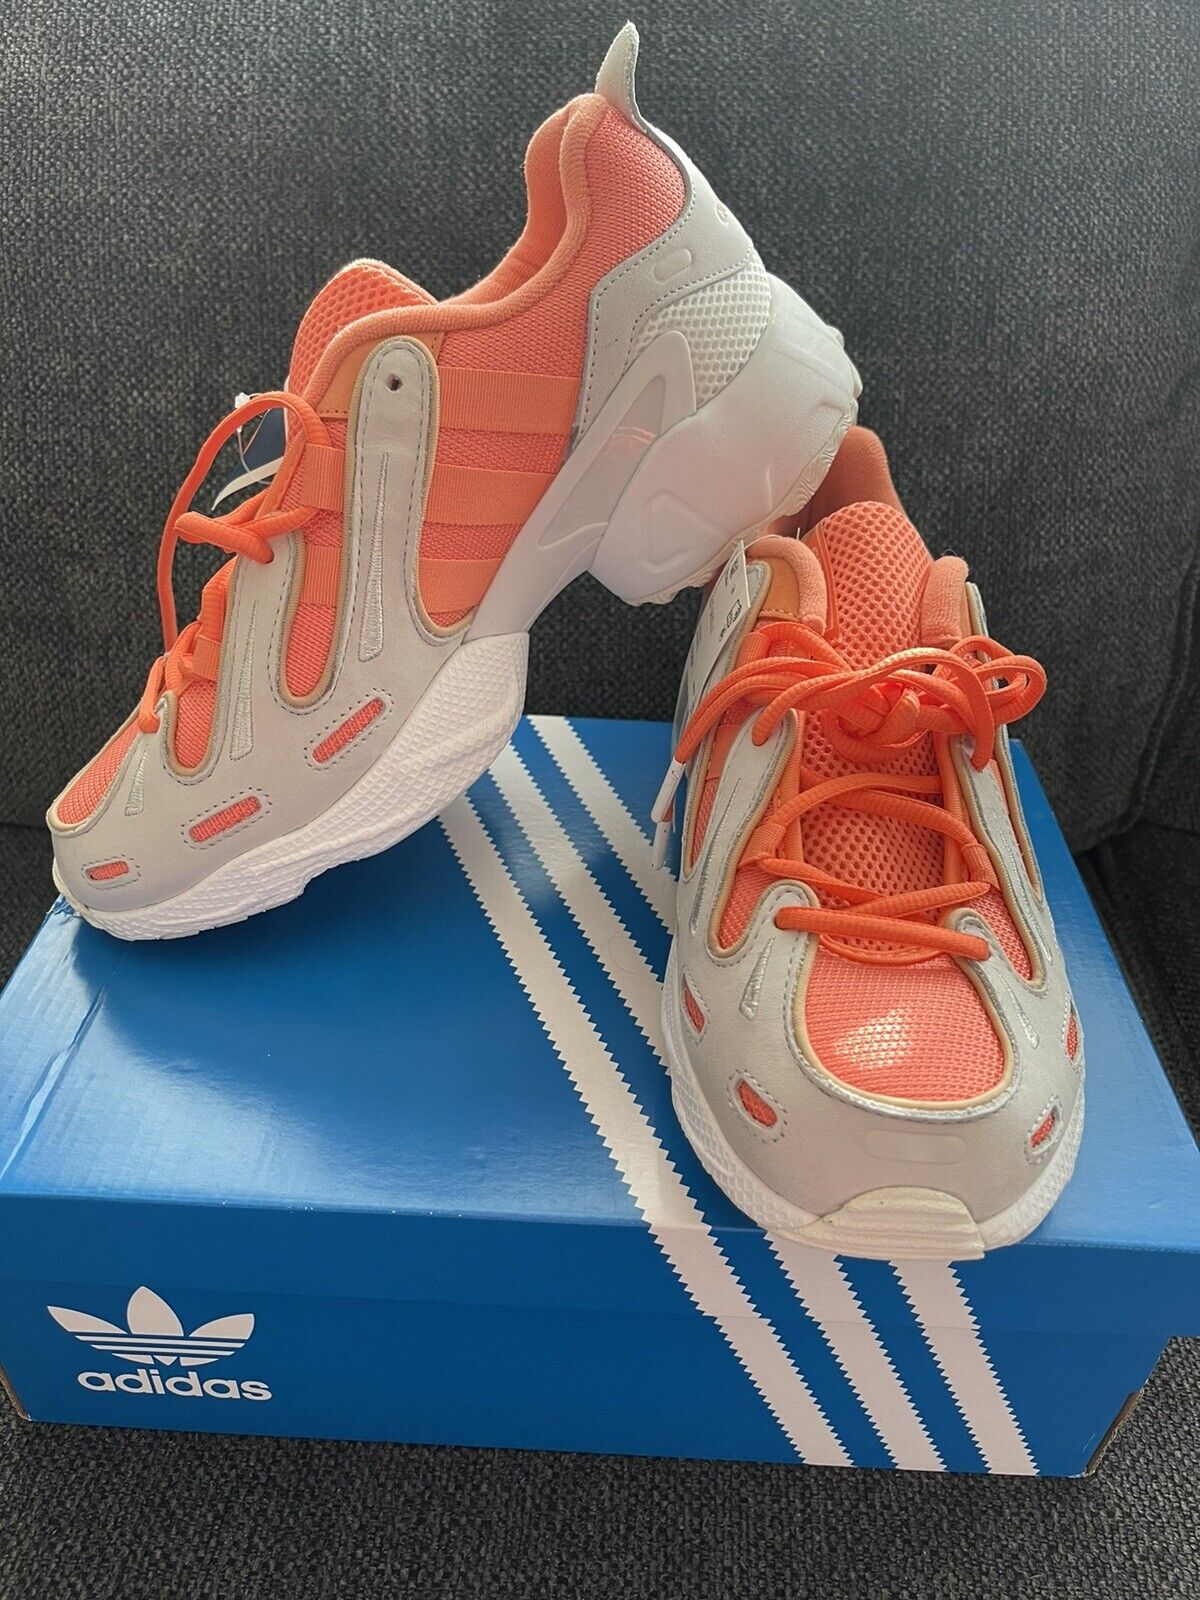 NEW - Adidas Gazelle Semi Coral Sneakers, W Size 8/ M | eBay